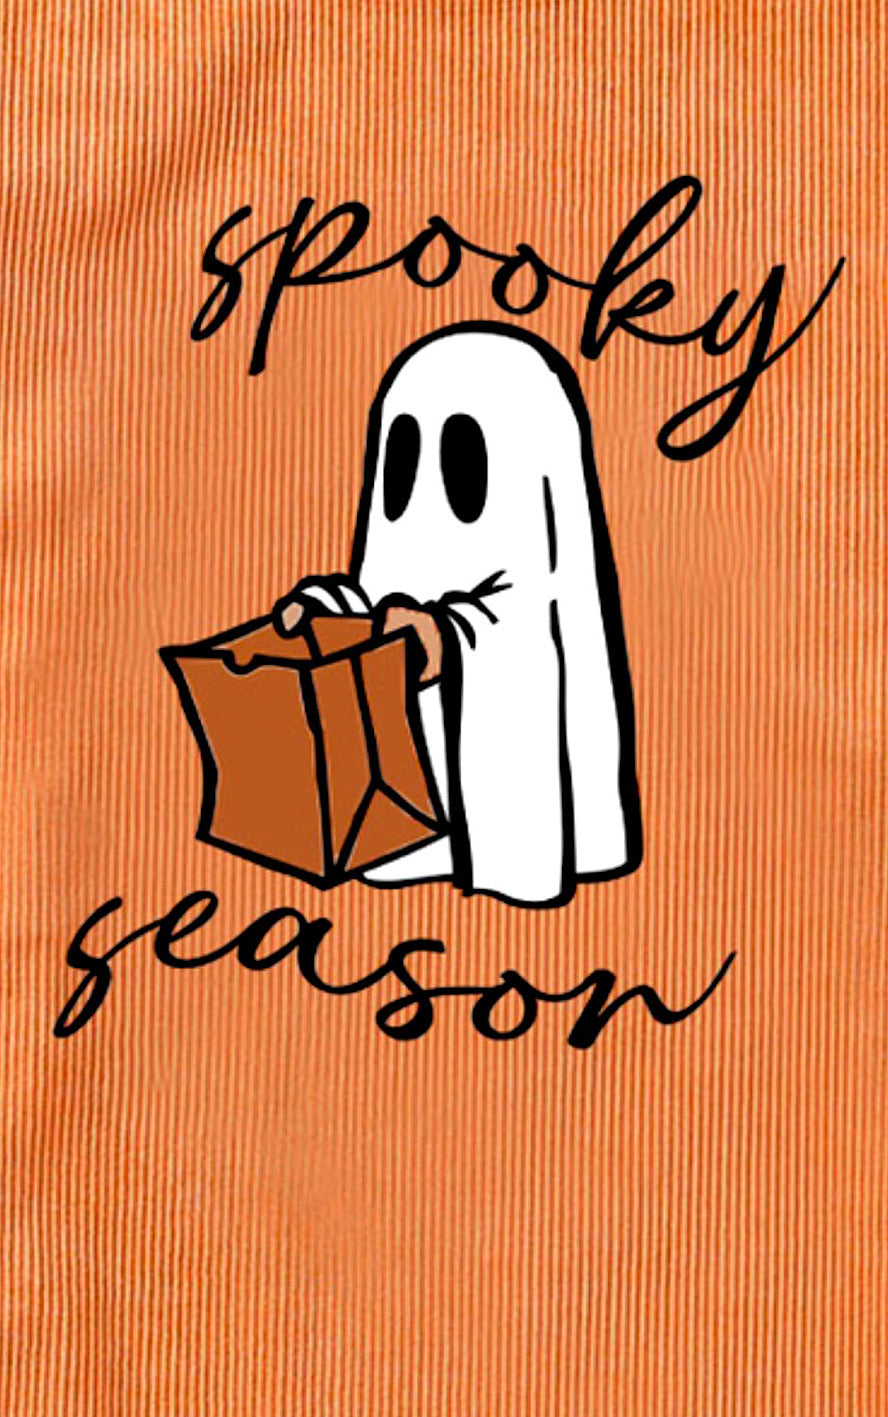 Spooky Season Orange Corded Sweatshirt, SM-2X